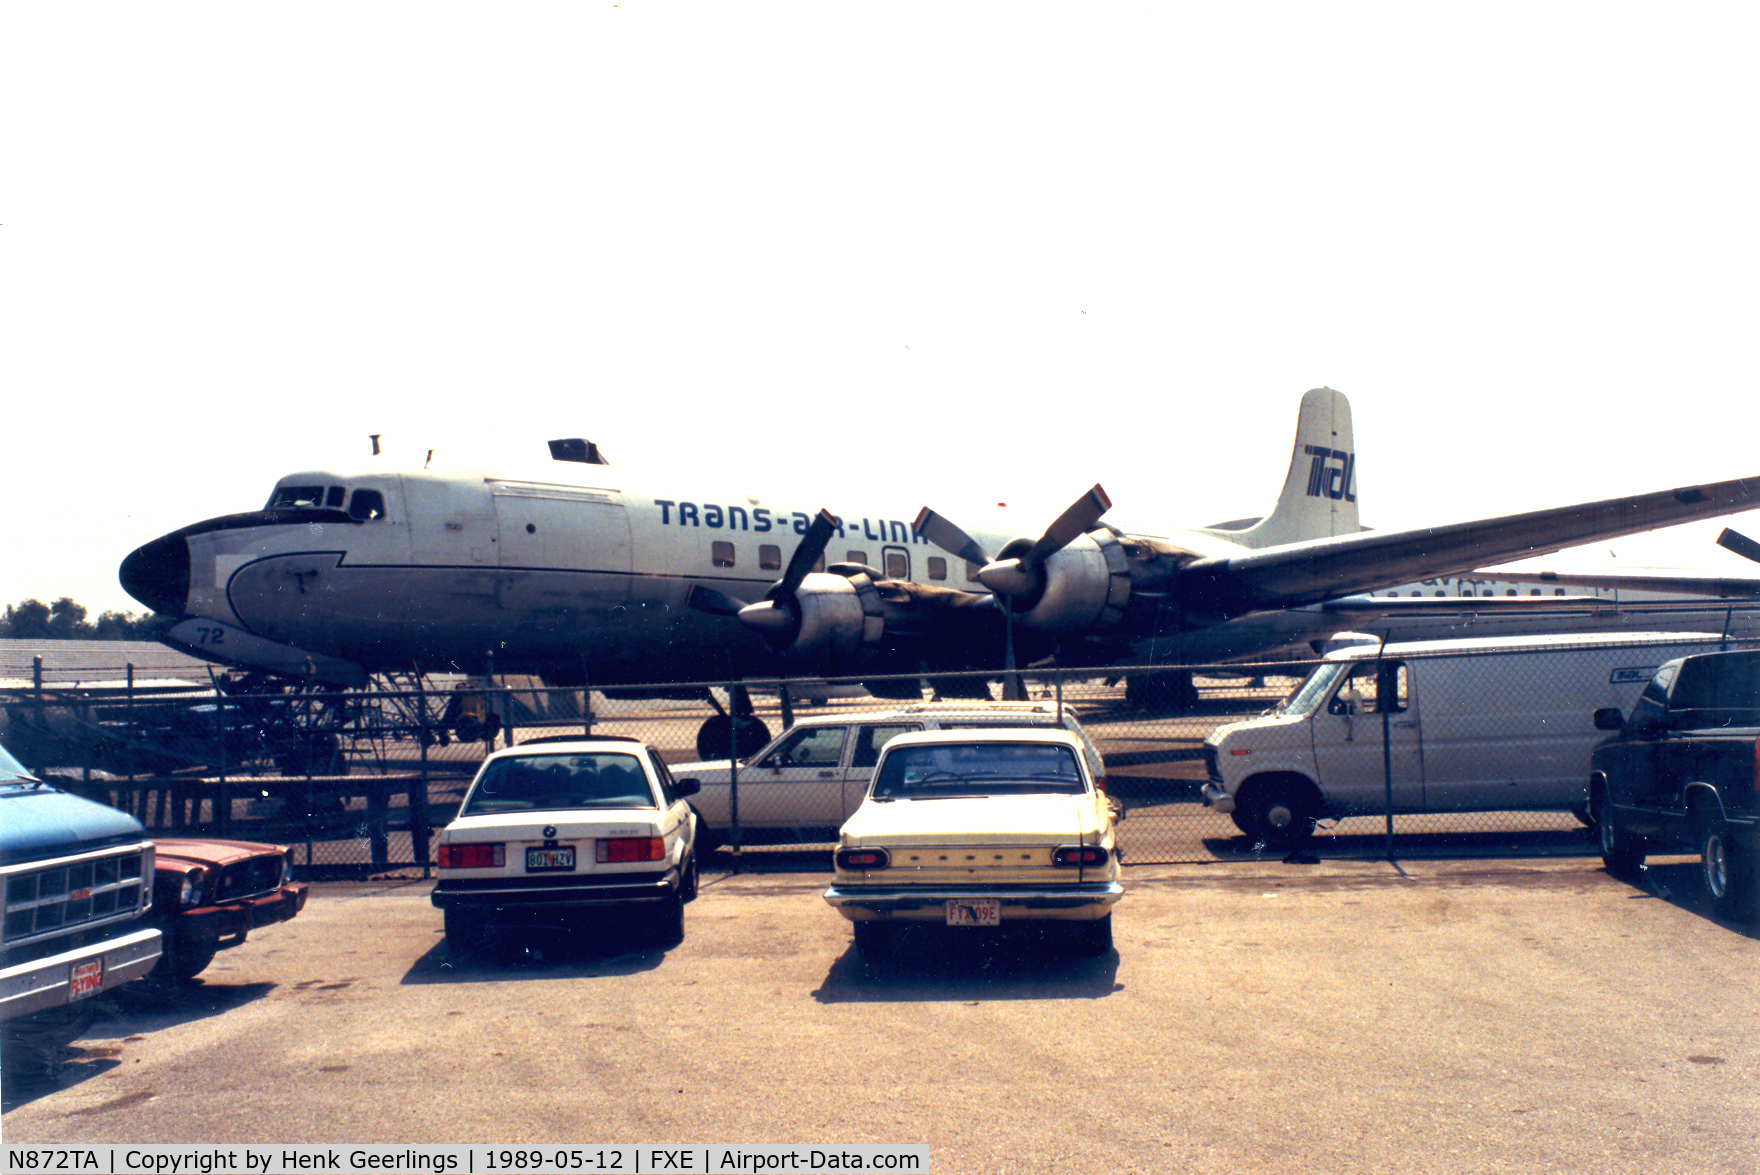 N872TA, 1953 Douglas C-118A Liftmaster (DC-6A) C/N 44668, Trans Air Link